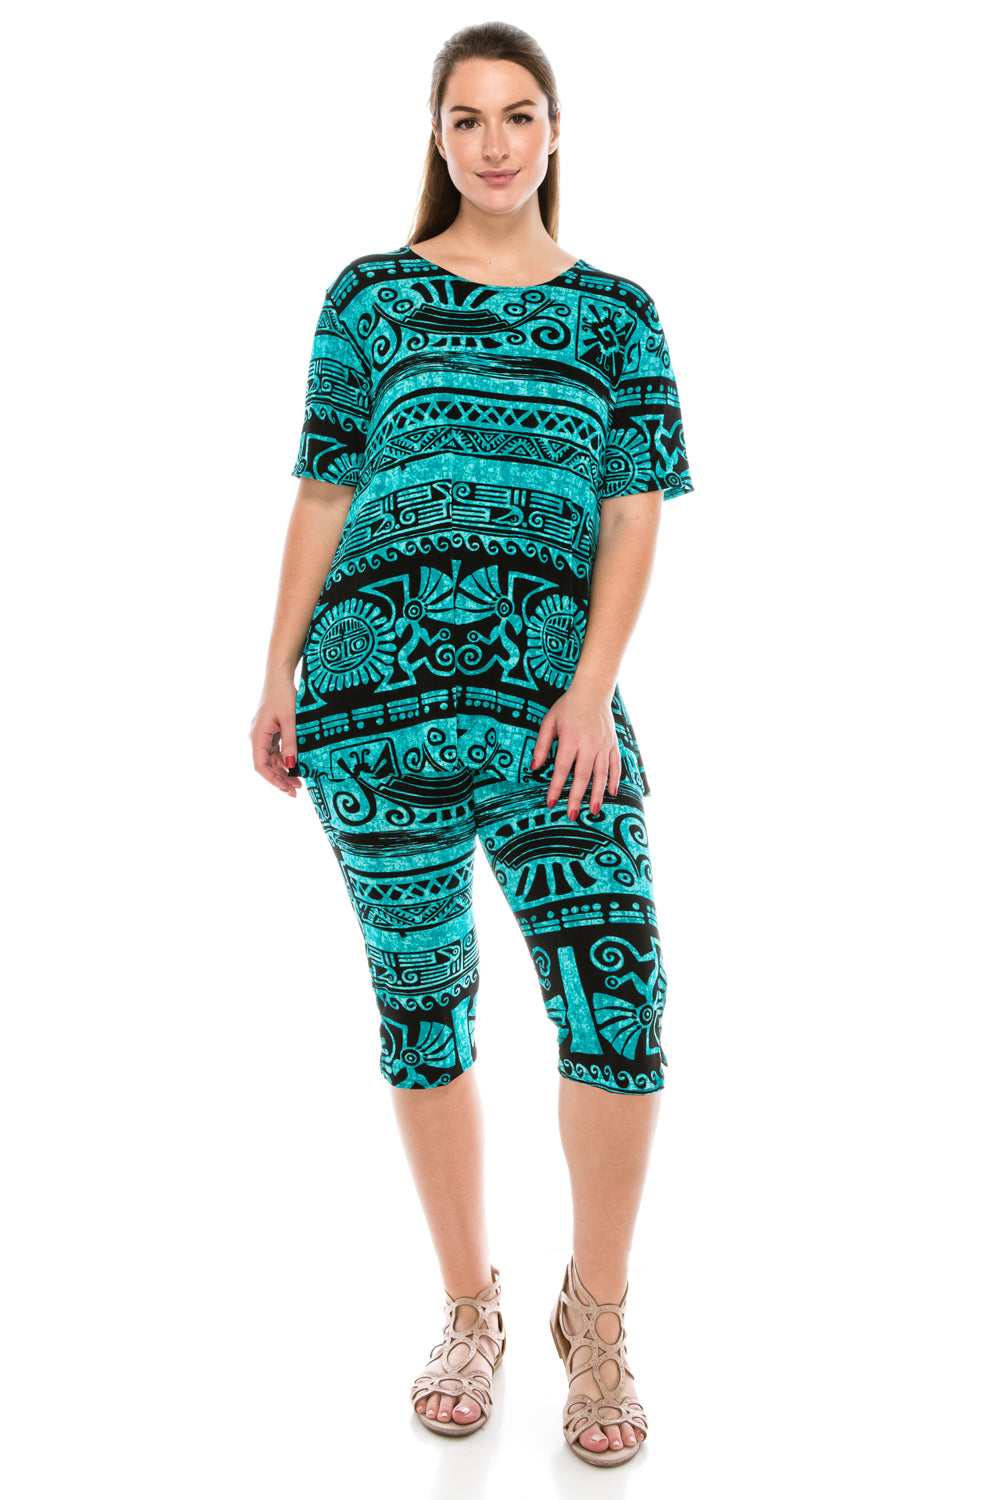 Jostar Women's Stretchy Capri Pant Set Short Sleeve Print, 903BN-SP-W901 - Jostar Online